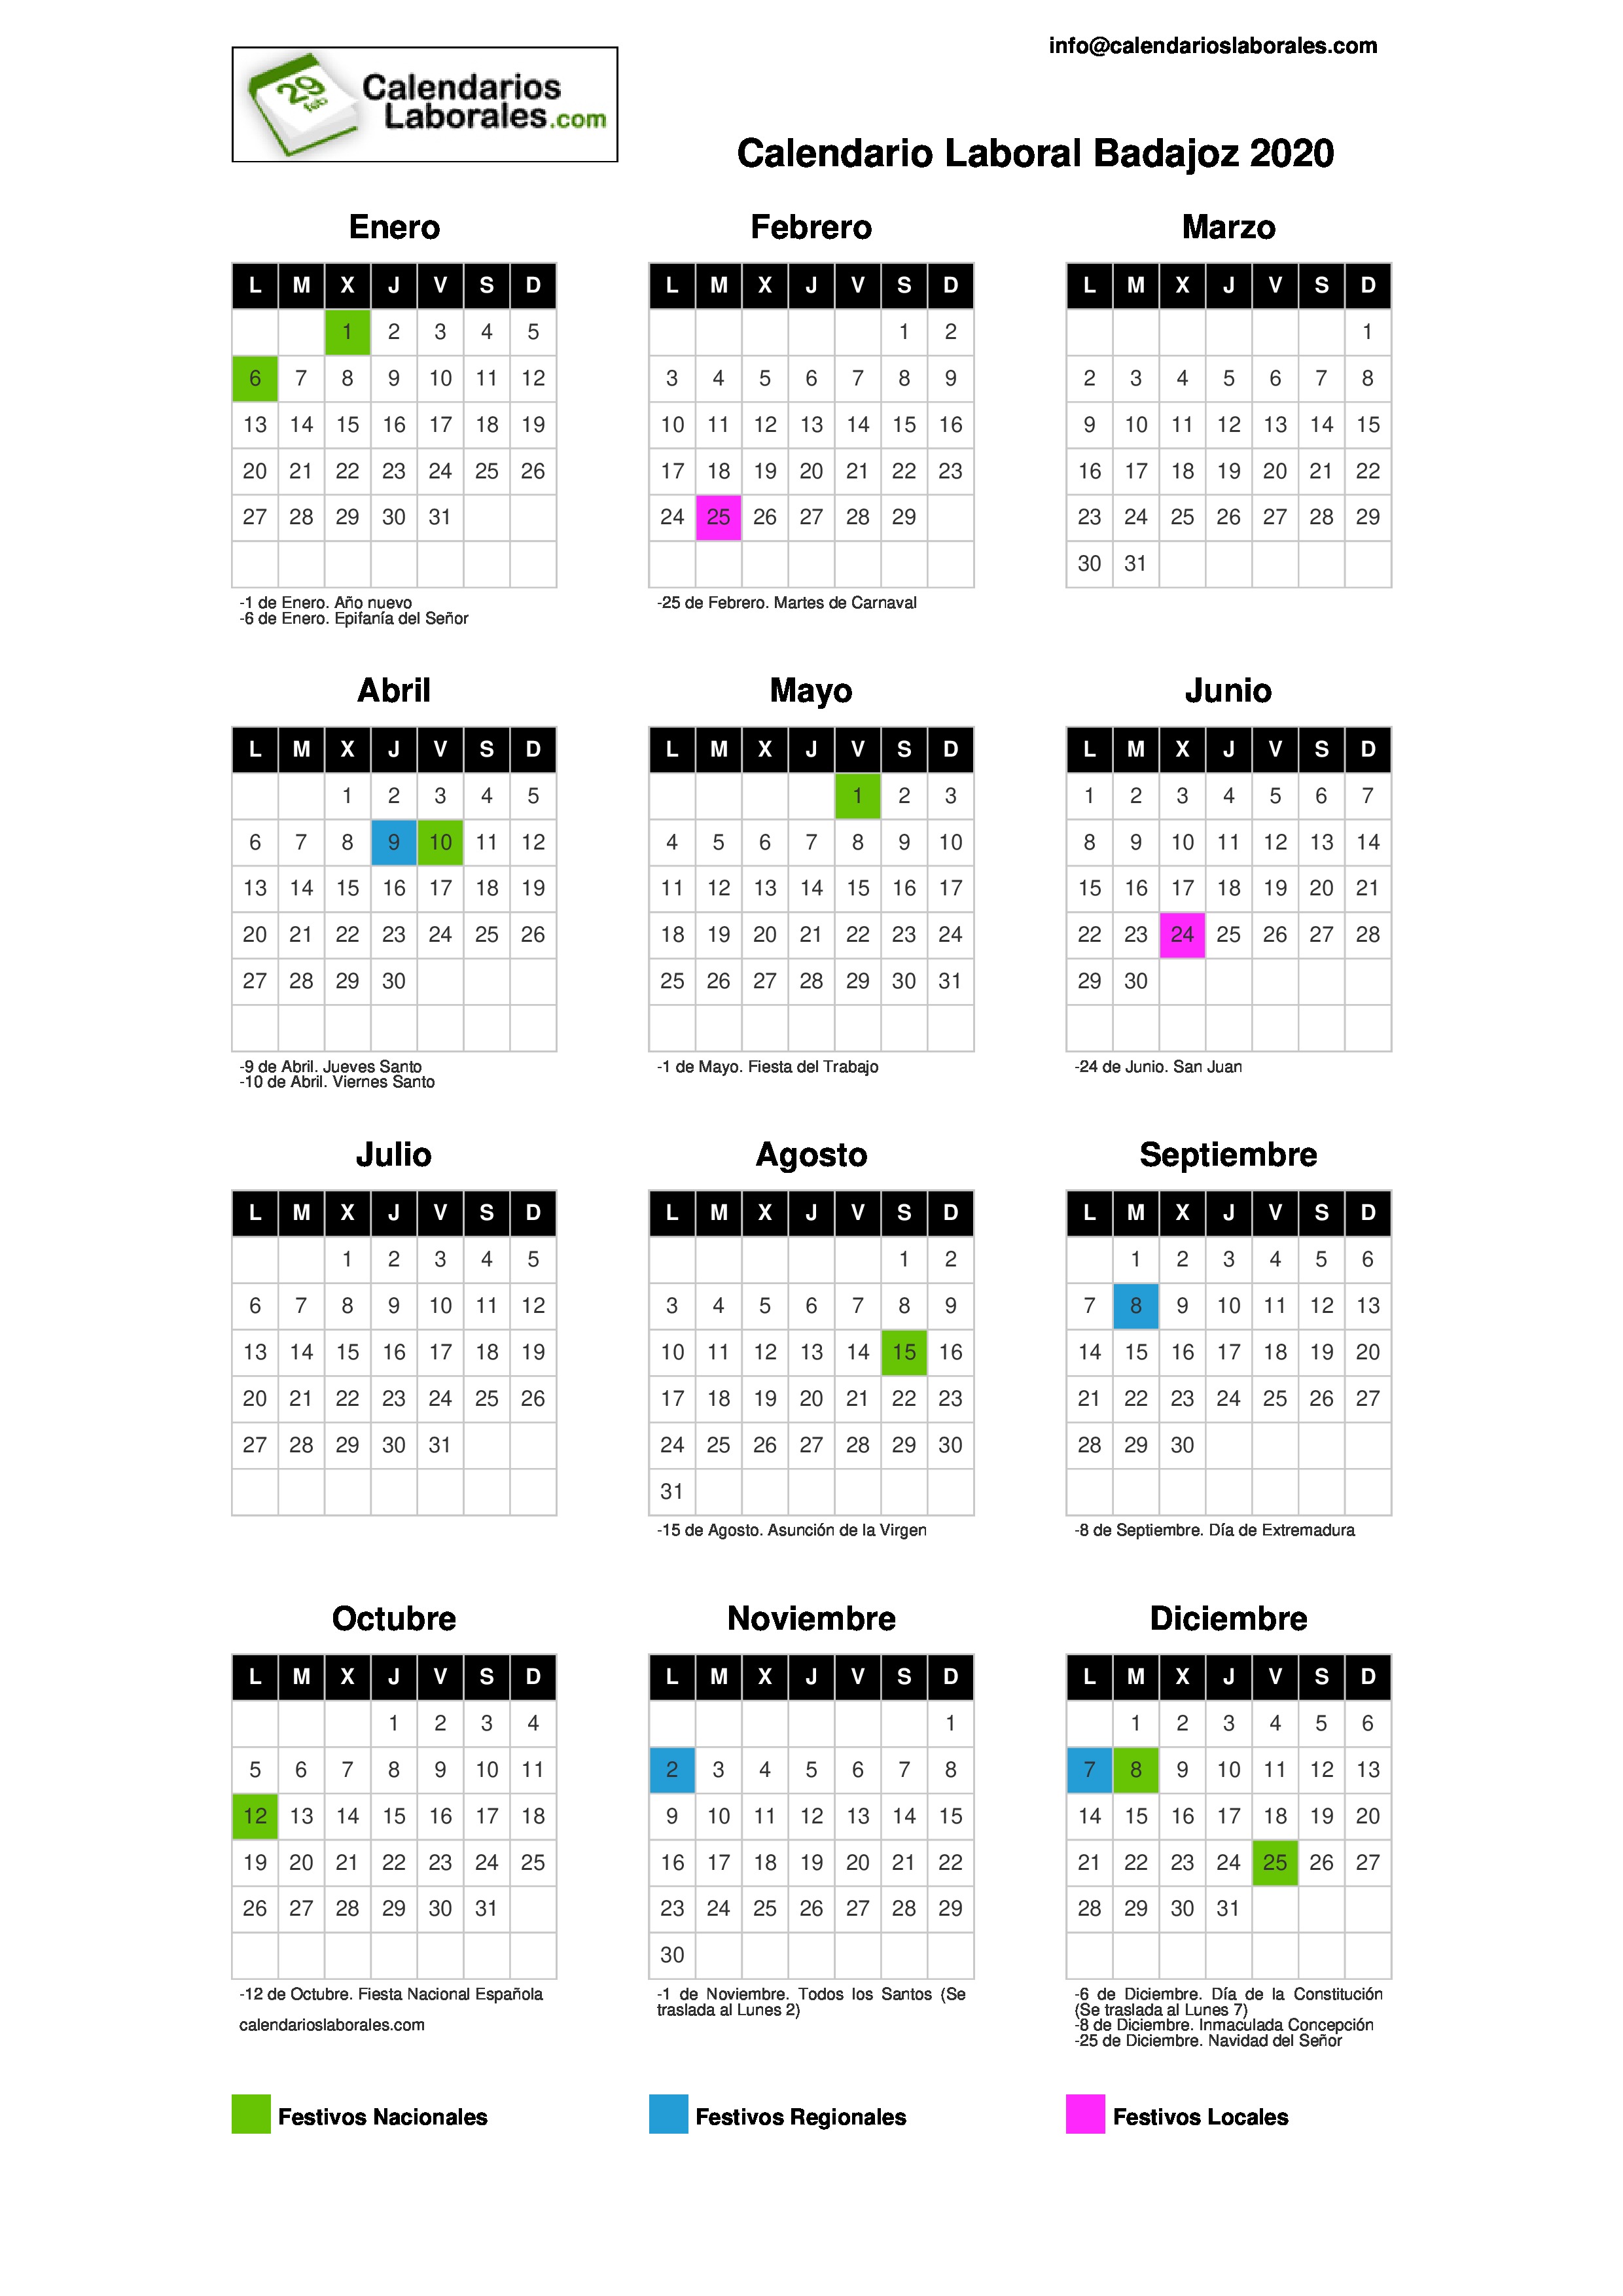 Calendario Laboral Badajoz 2020